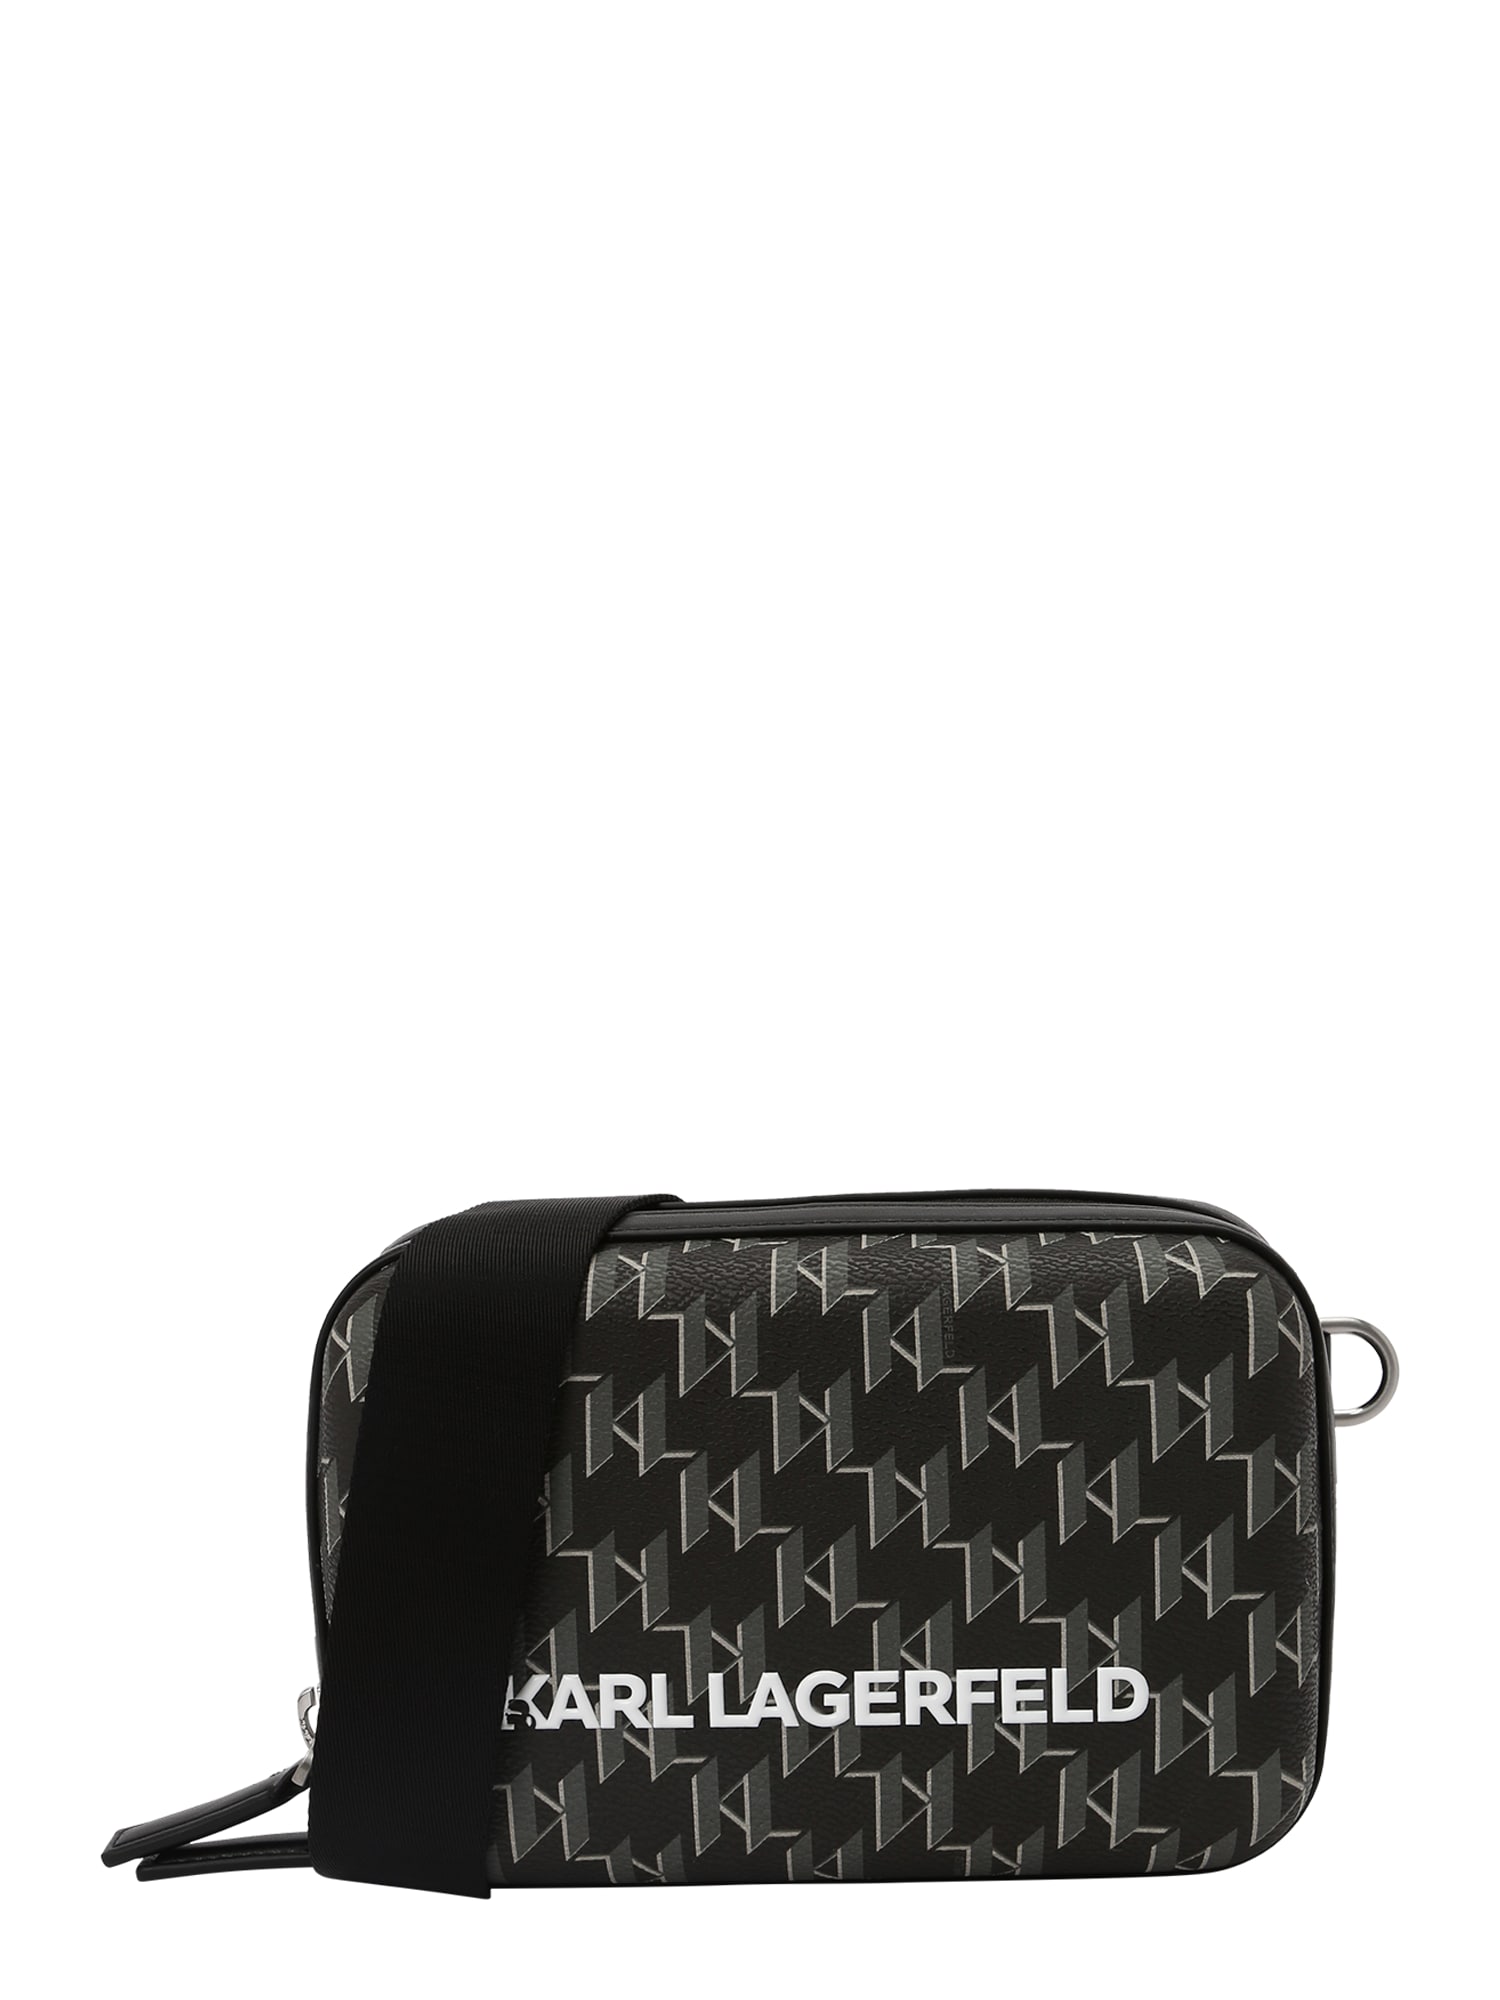 Karl Lagerfeld Geantă de umăr  gri închis / negru / alb